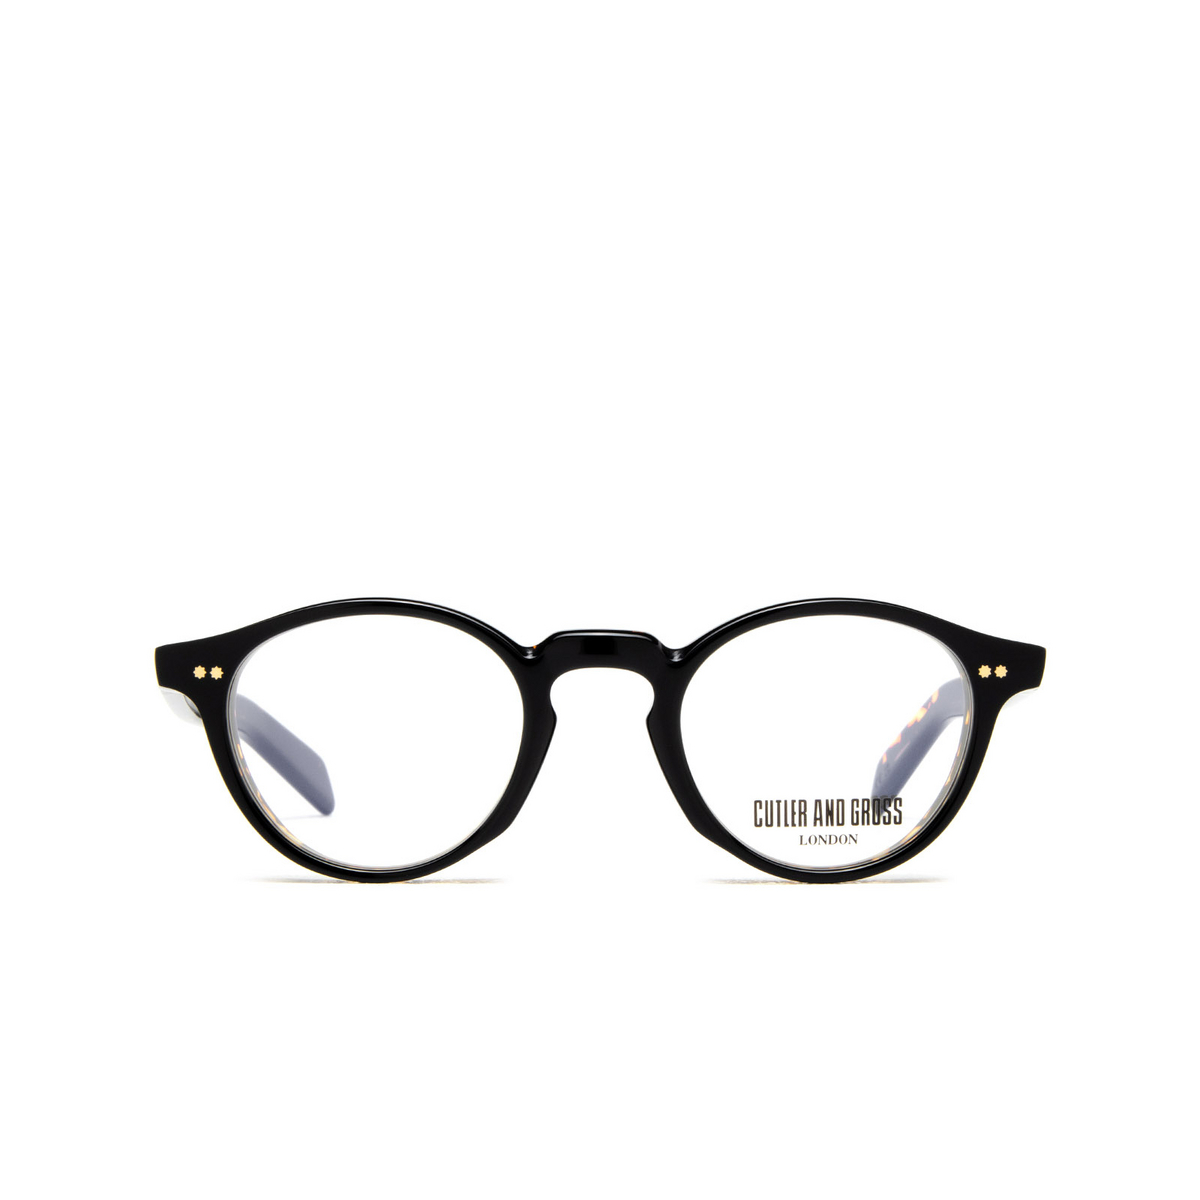 Cutler and Gross GR04 Eyeglasses 01 Black On Havana - front view